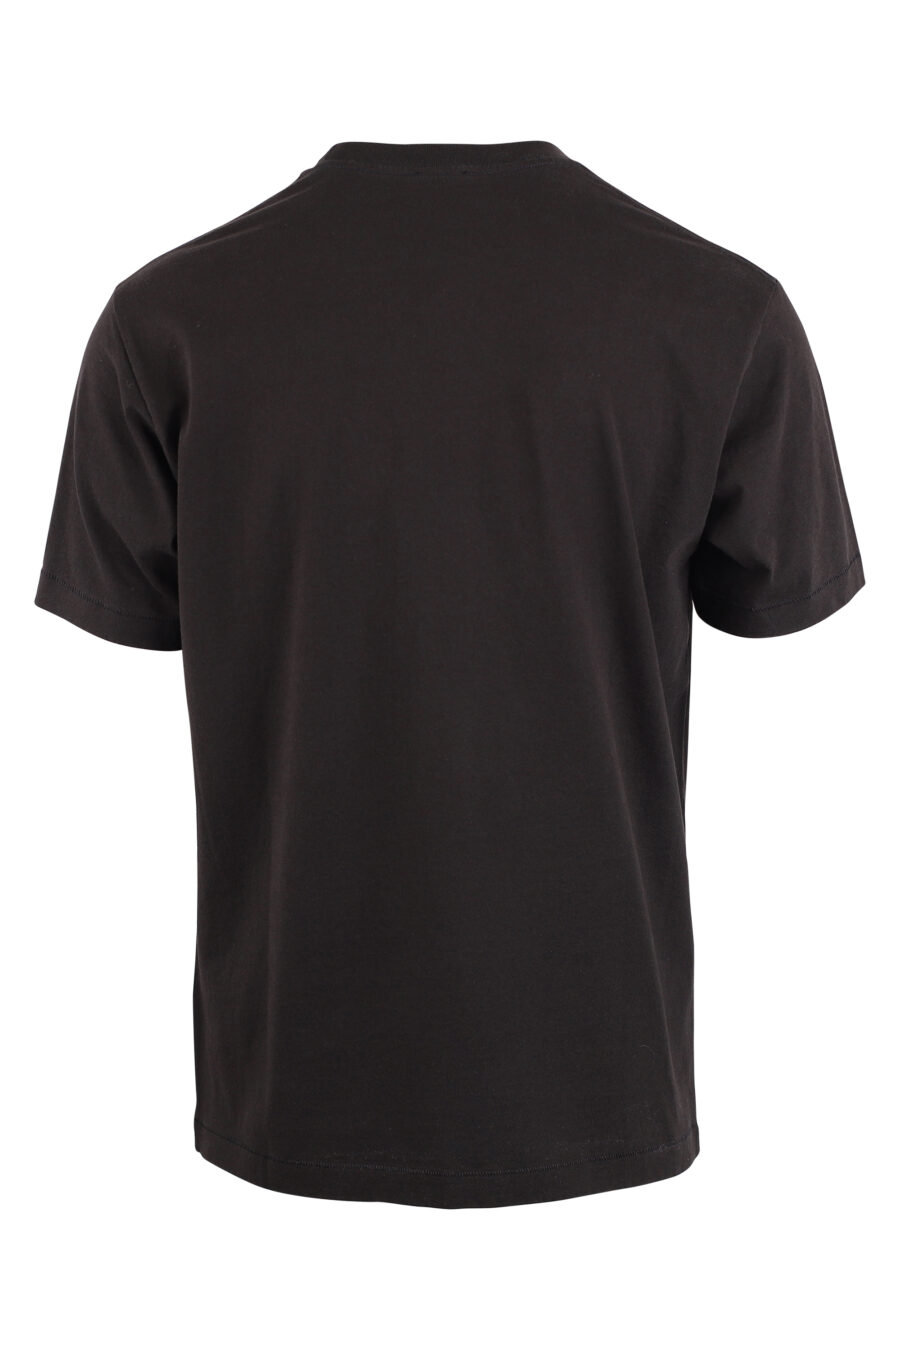 Camiseta negra con maxilogo "paris classic" naranja - IMG 9383